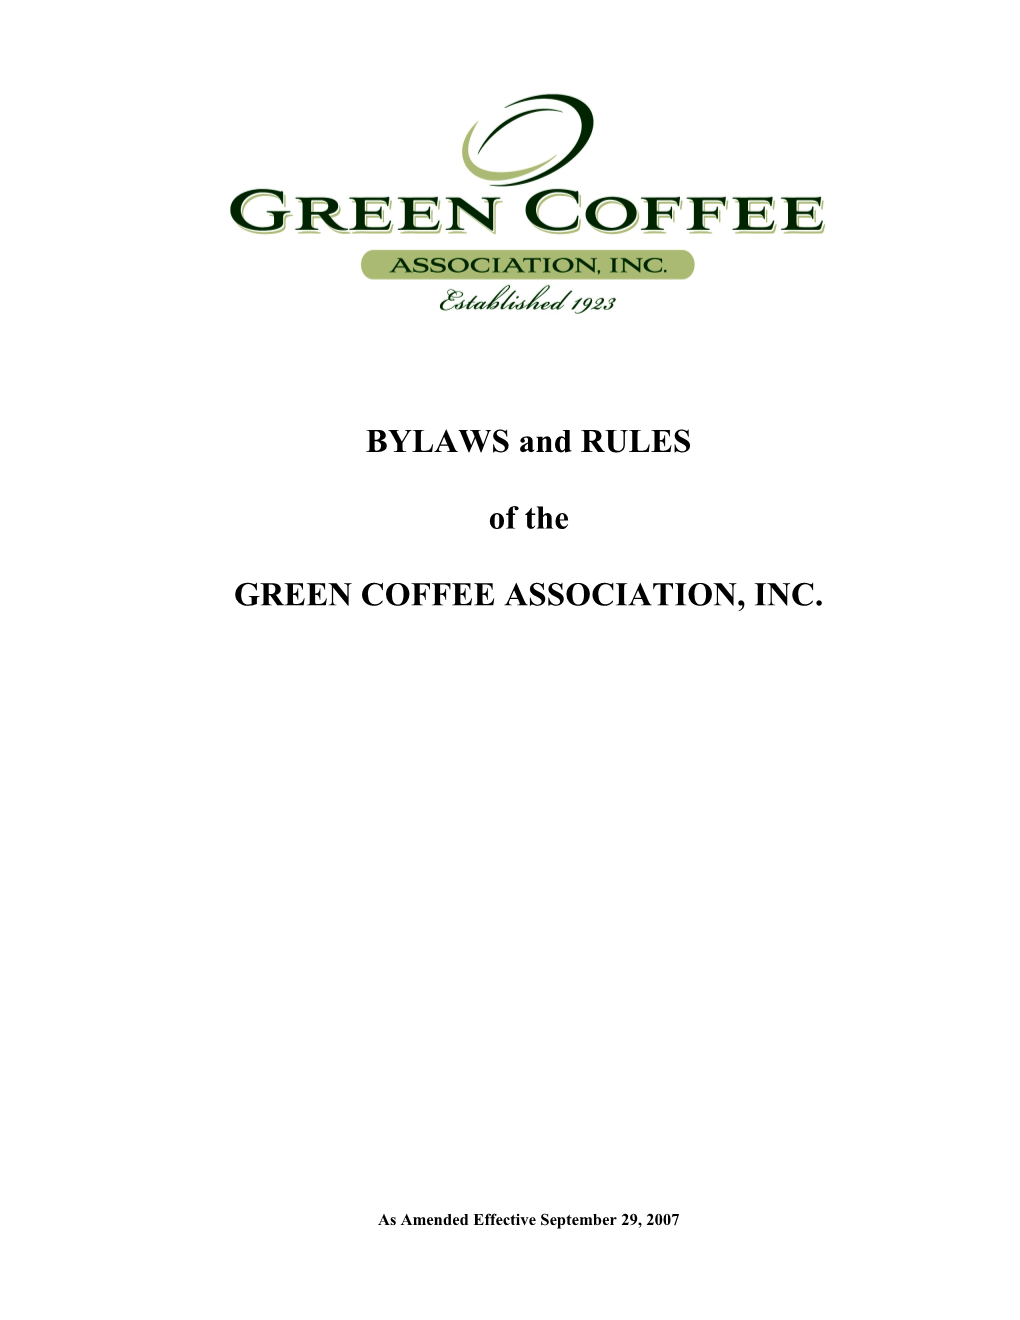 Green Coffee Association, Inc